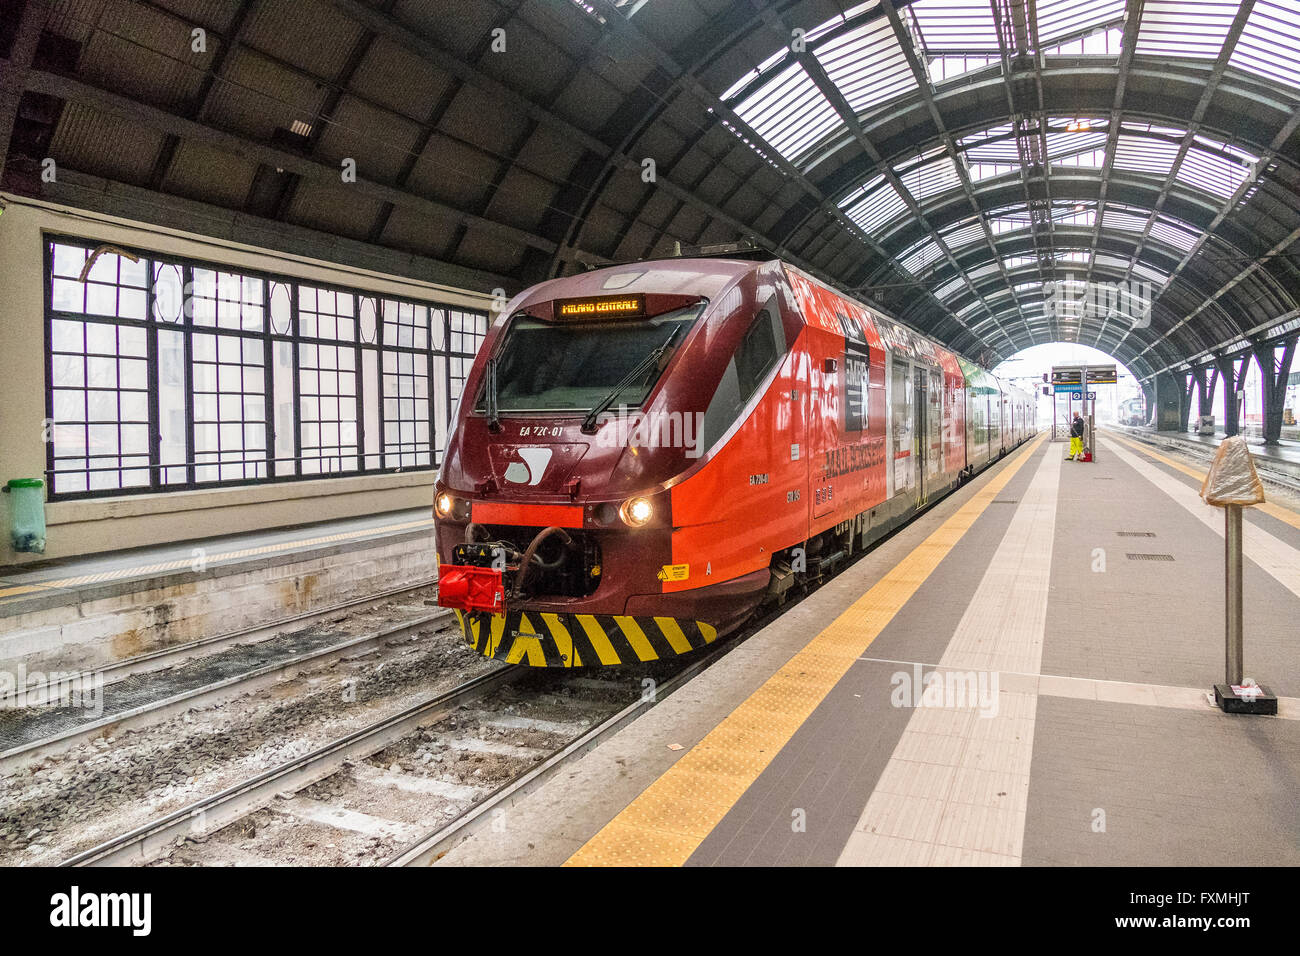 En train La Gare Centrale de Milan, Milan, Italie Banque D'Images